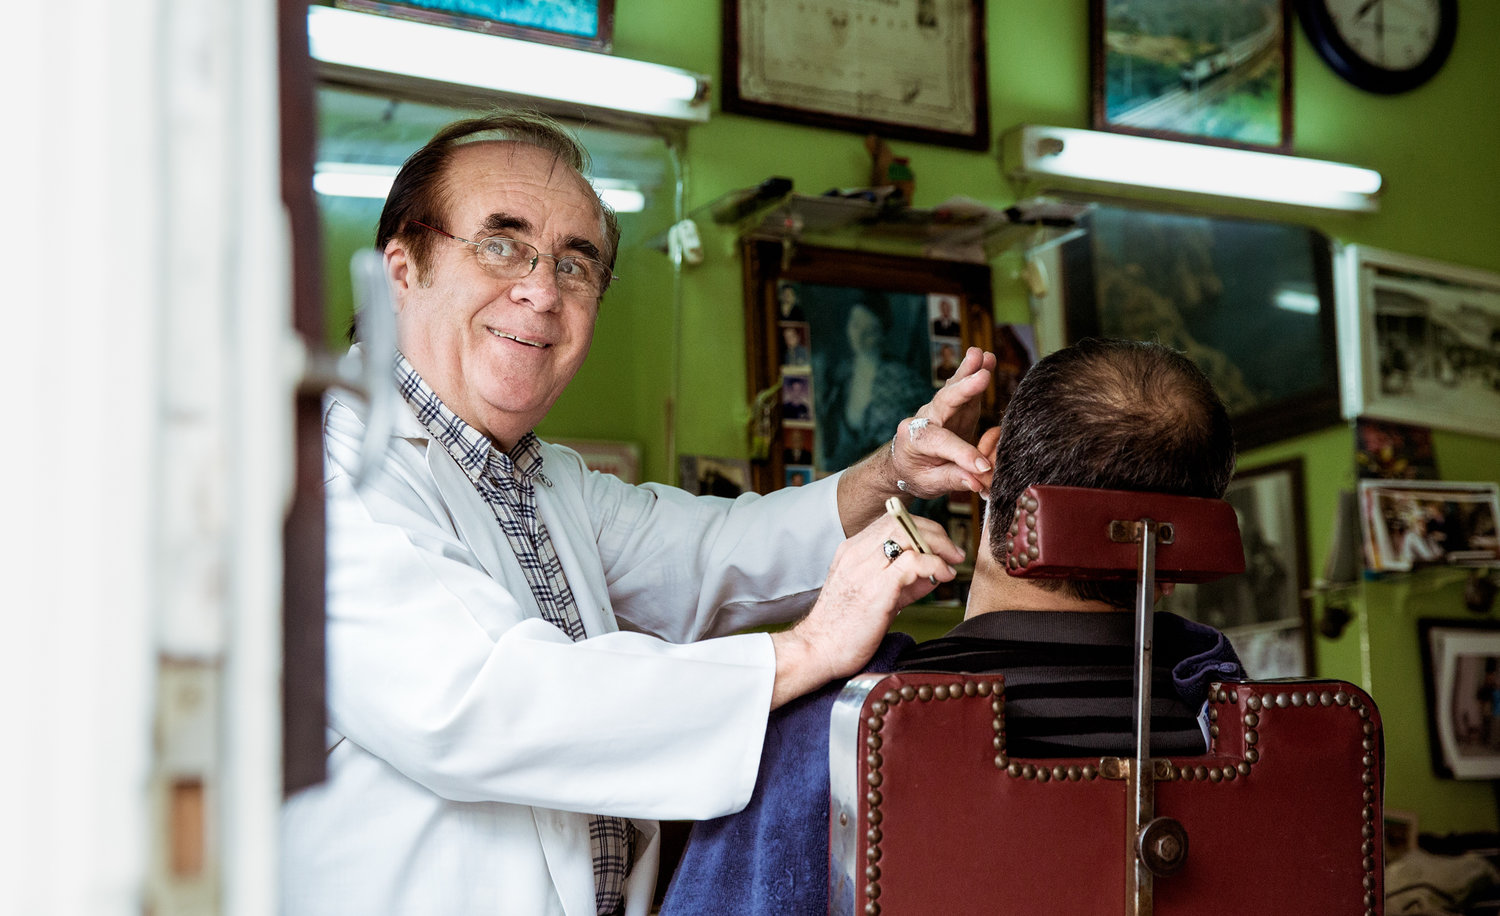 istanbul_yedikule_barbers-1905-barber-shaving-customer.jpg